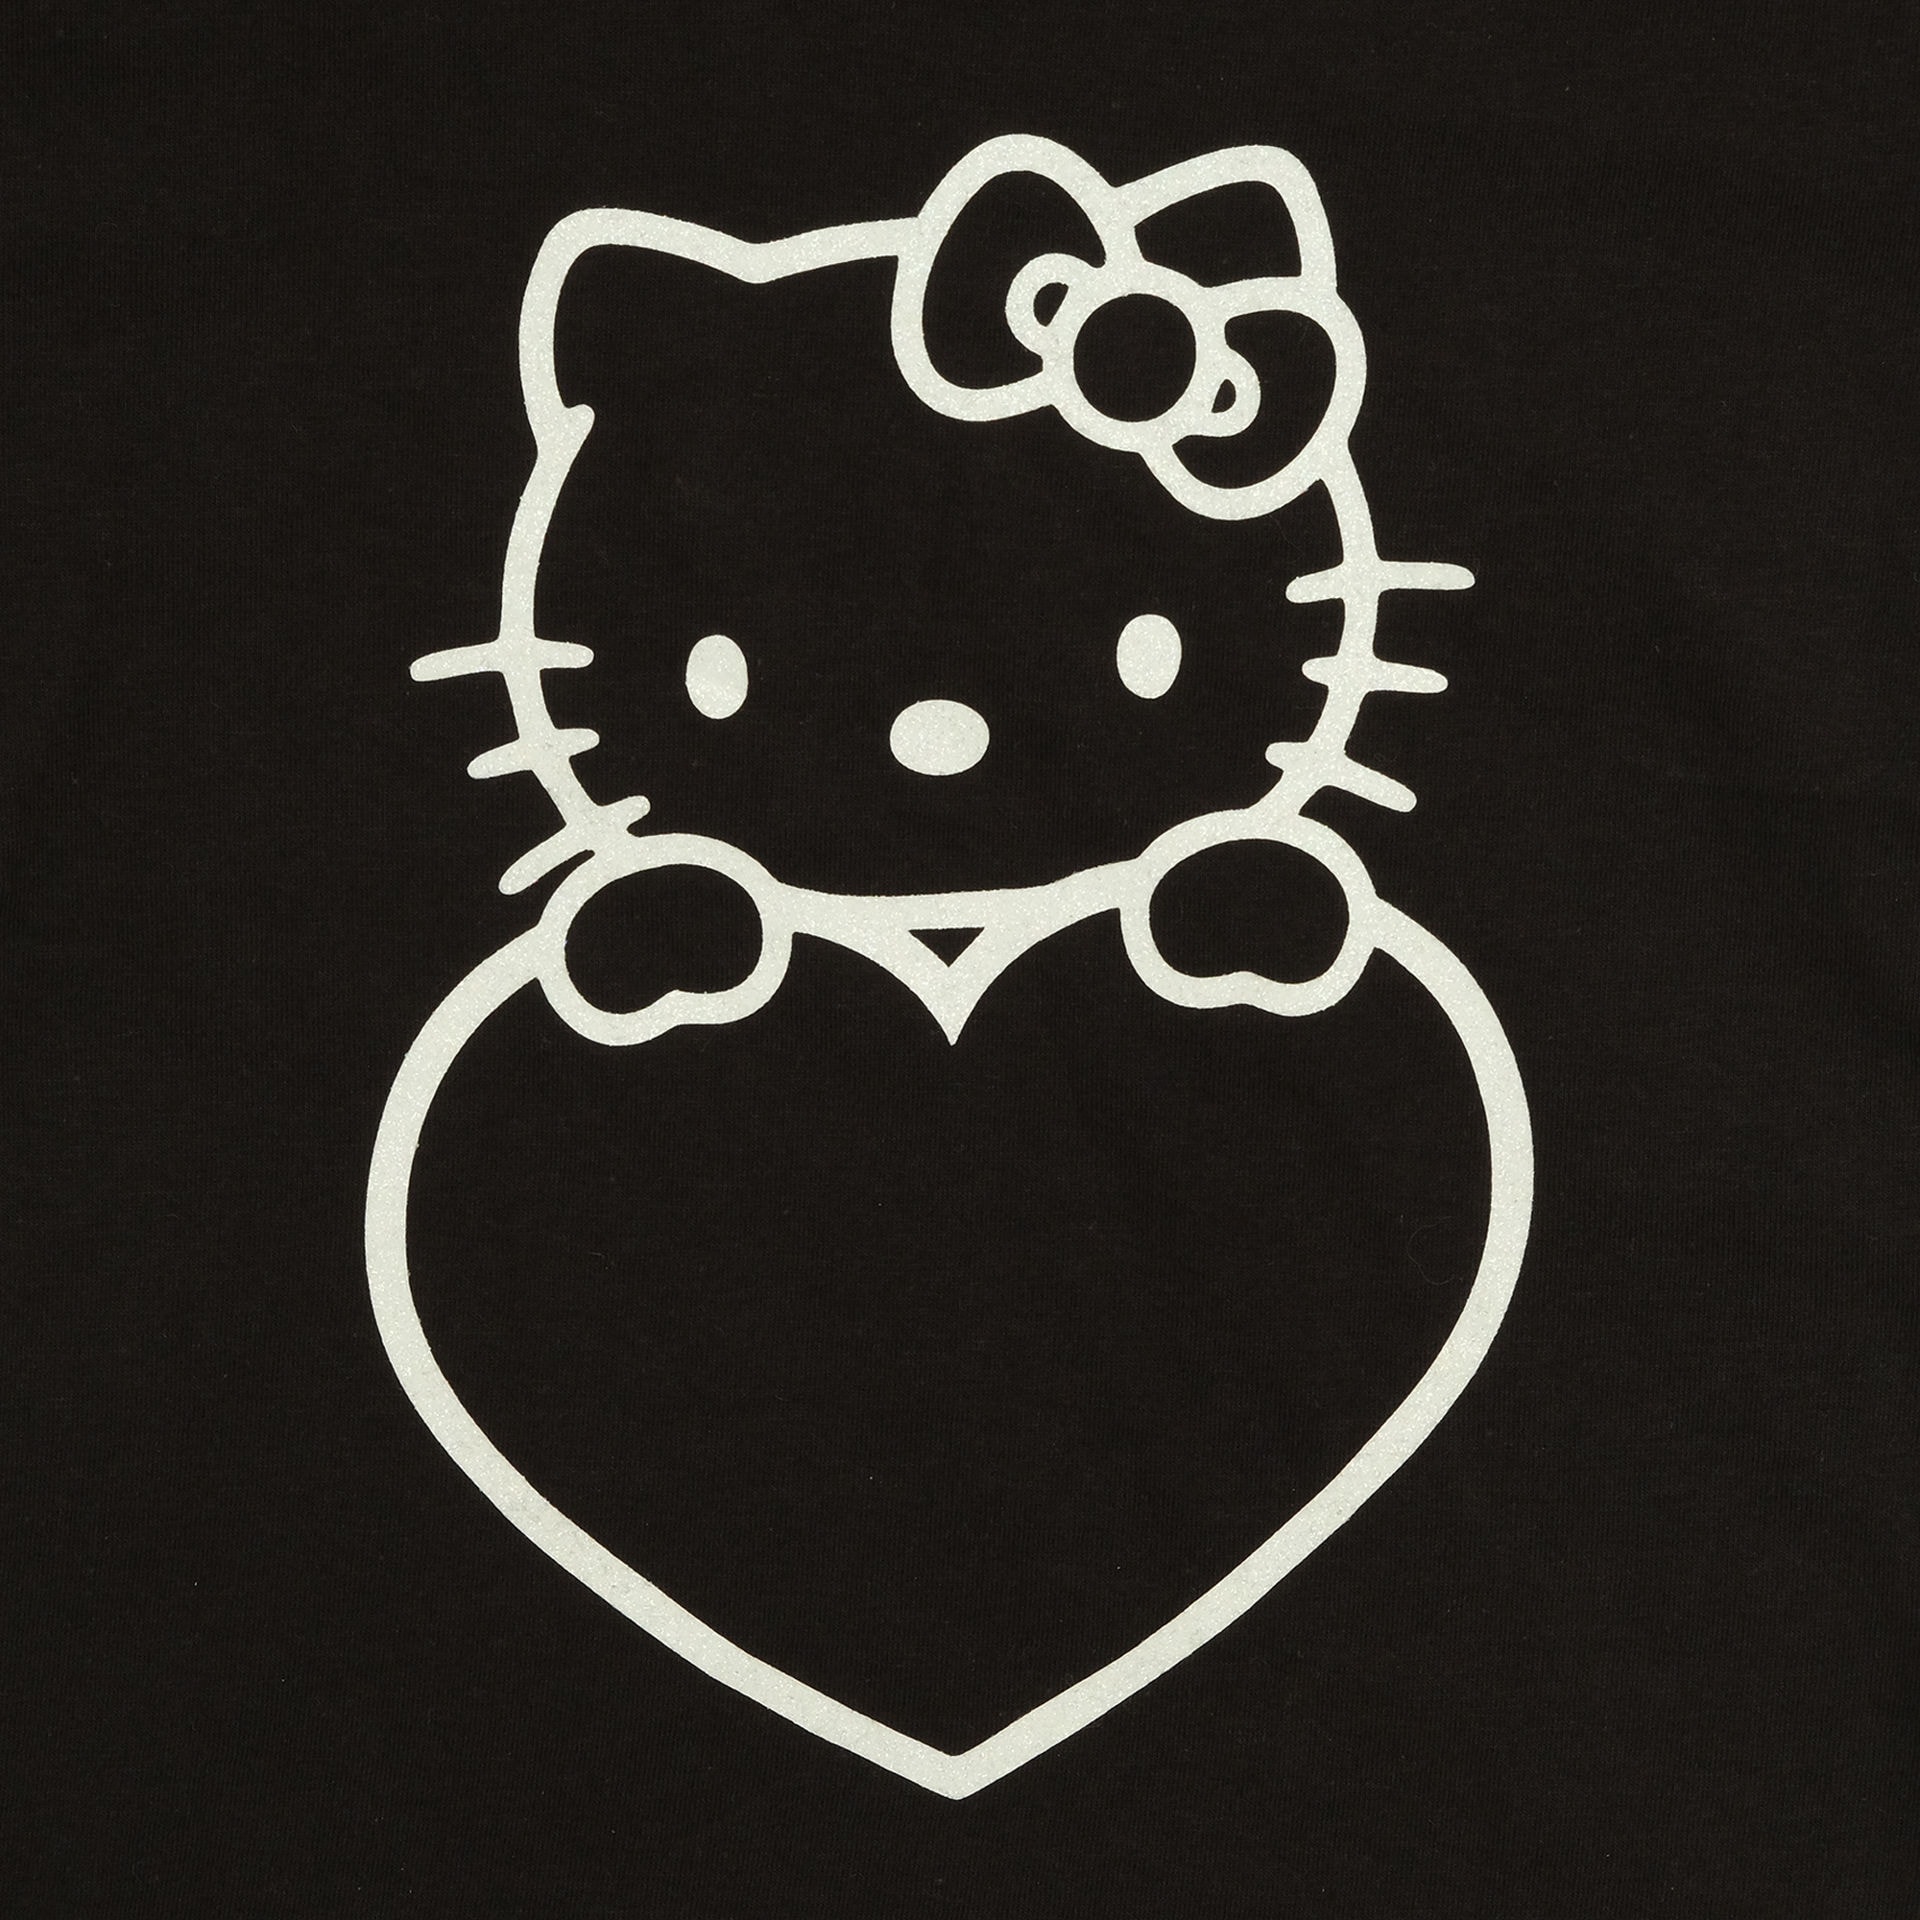 hello kitty t-shirt - Roblox